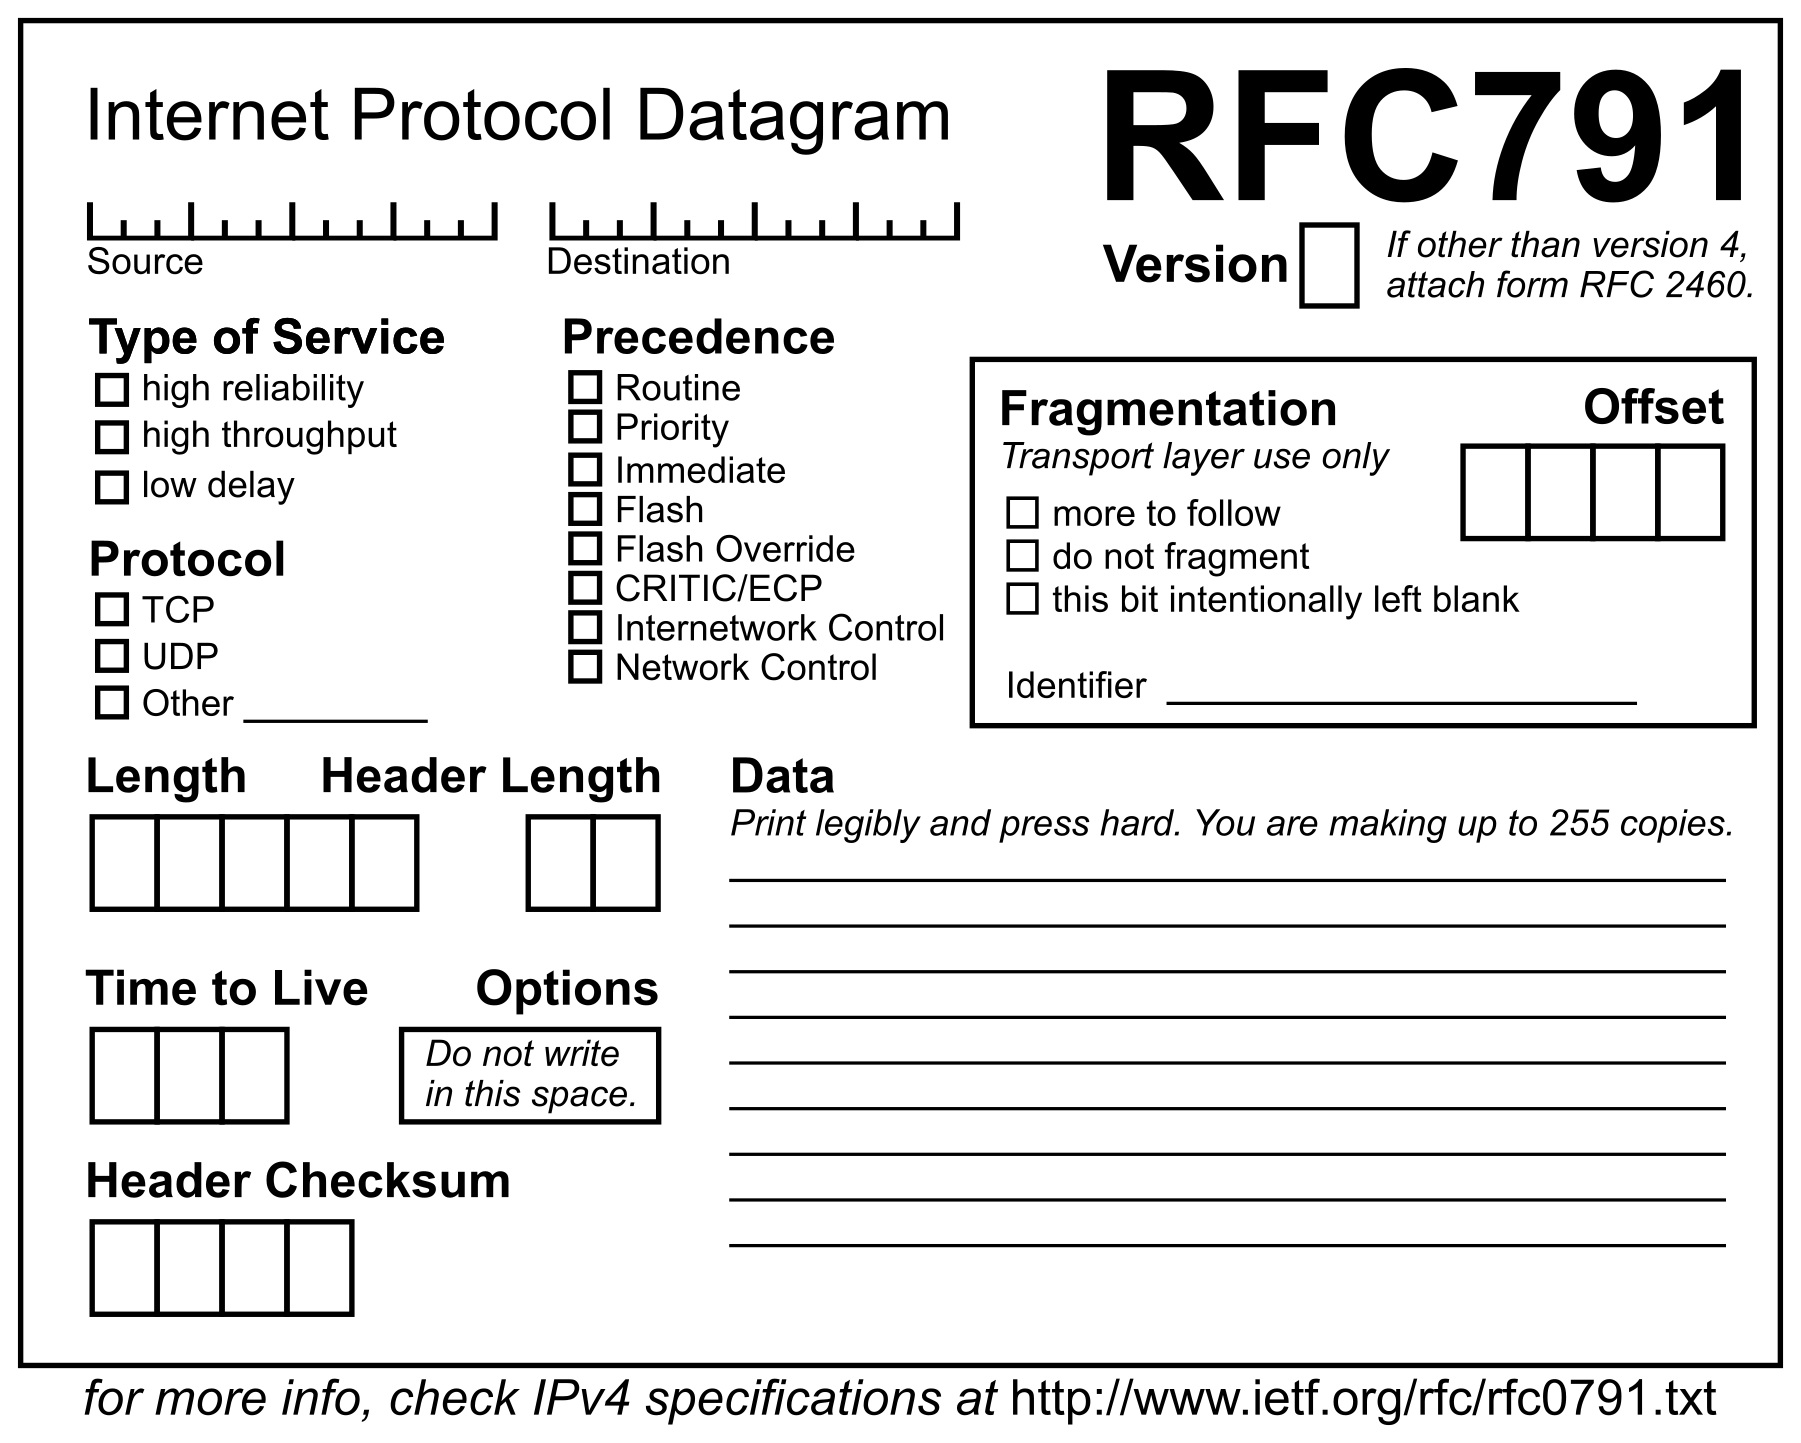 Internet Protocol Datagram - RFC791